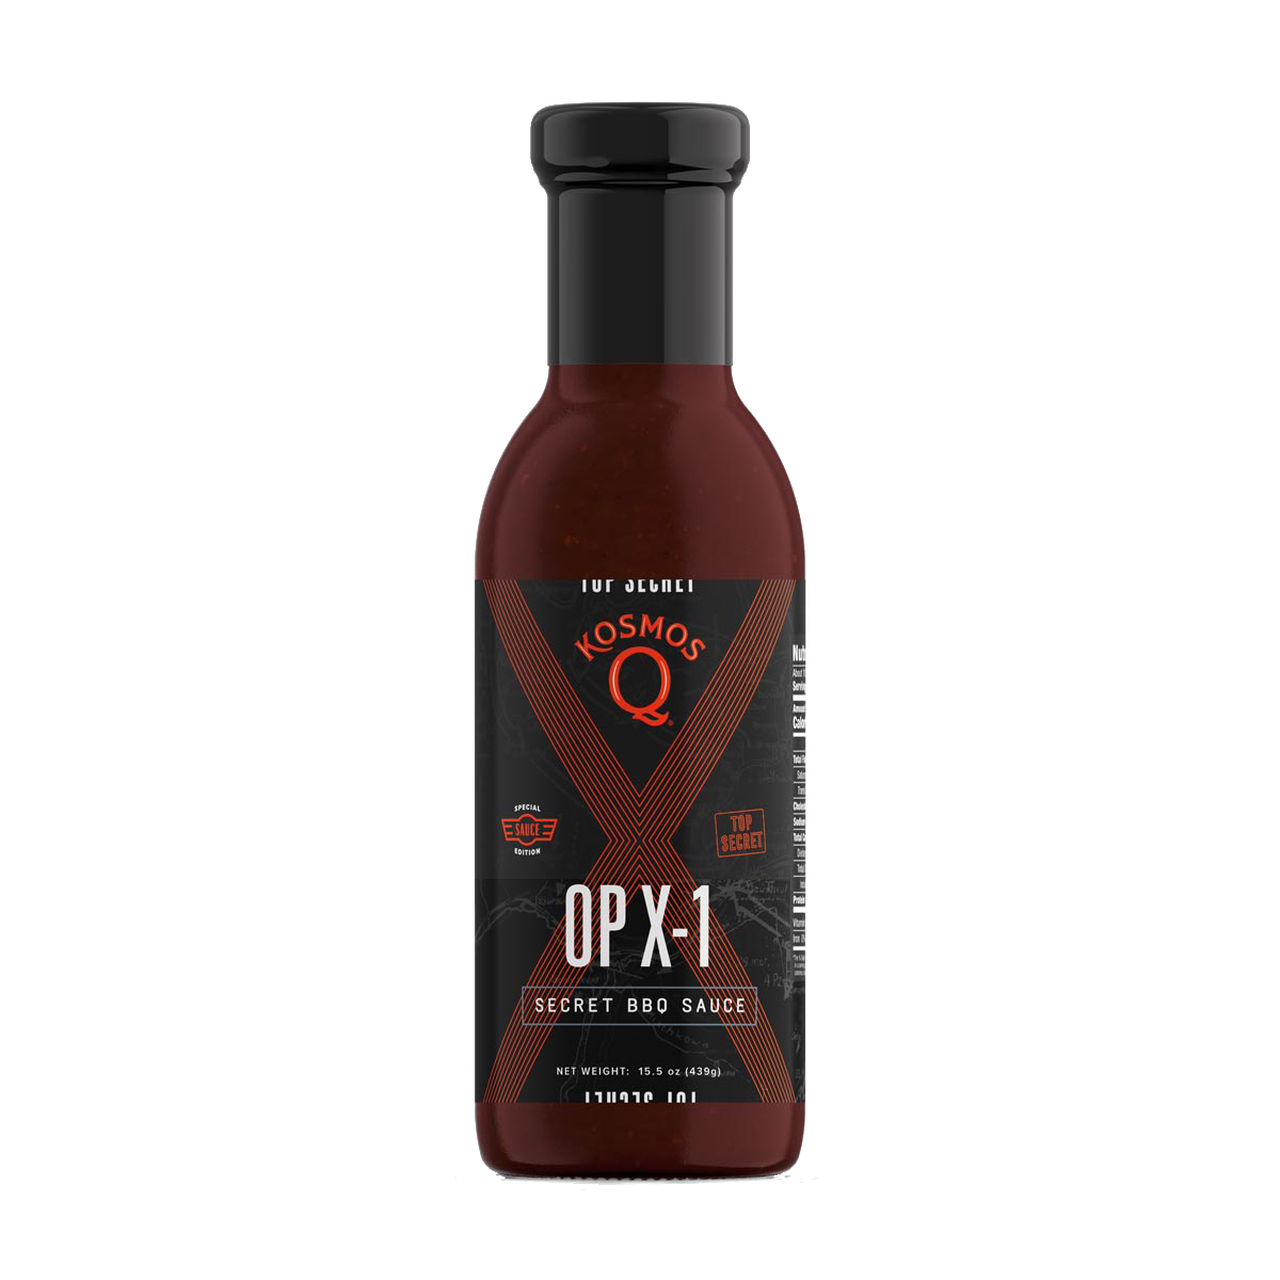 Kosmo's Q - OP X1 BBQ Sauce